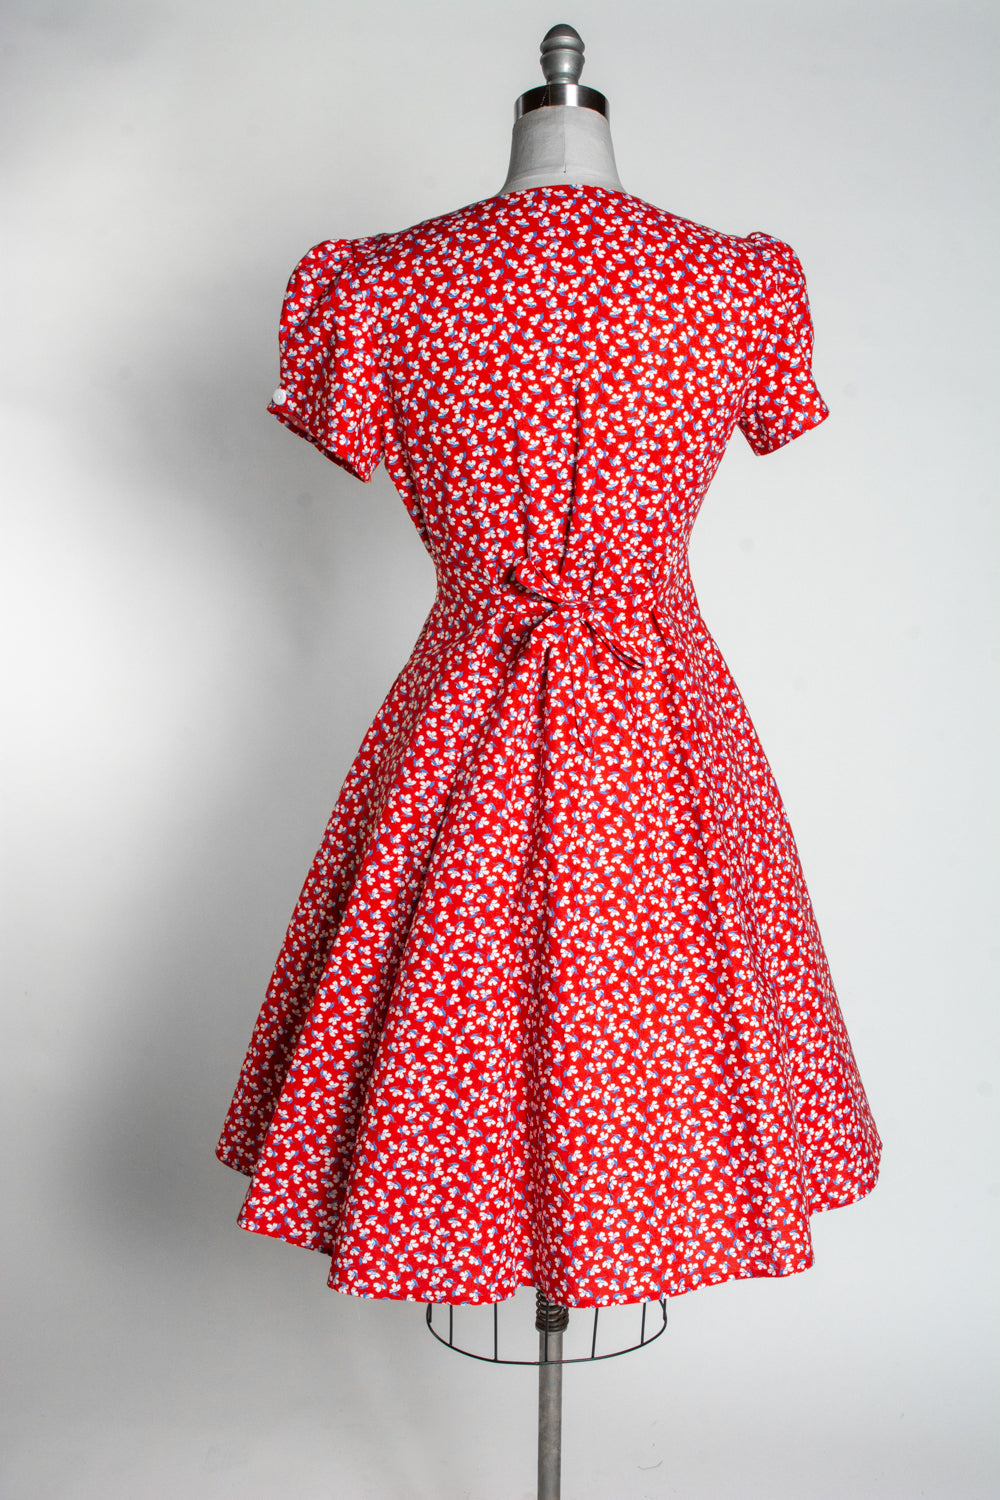 Millie Dress - Sweet Pea, Red